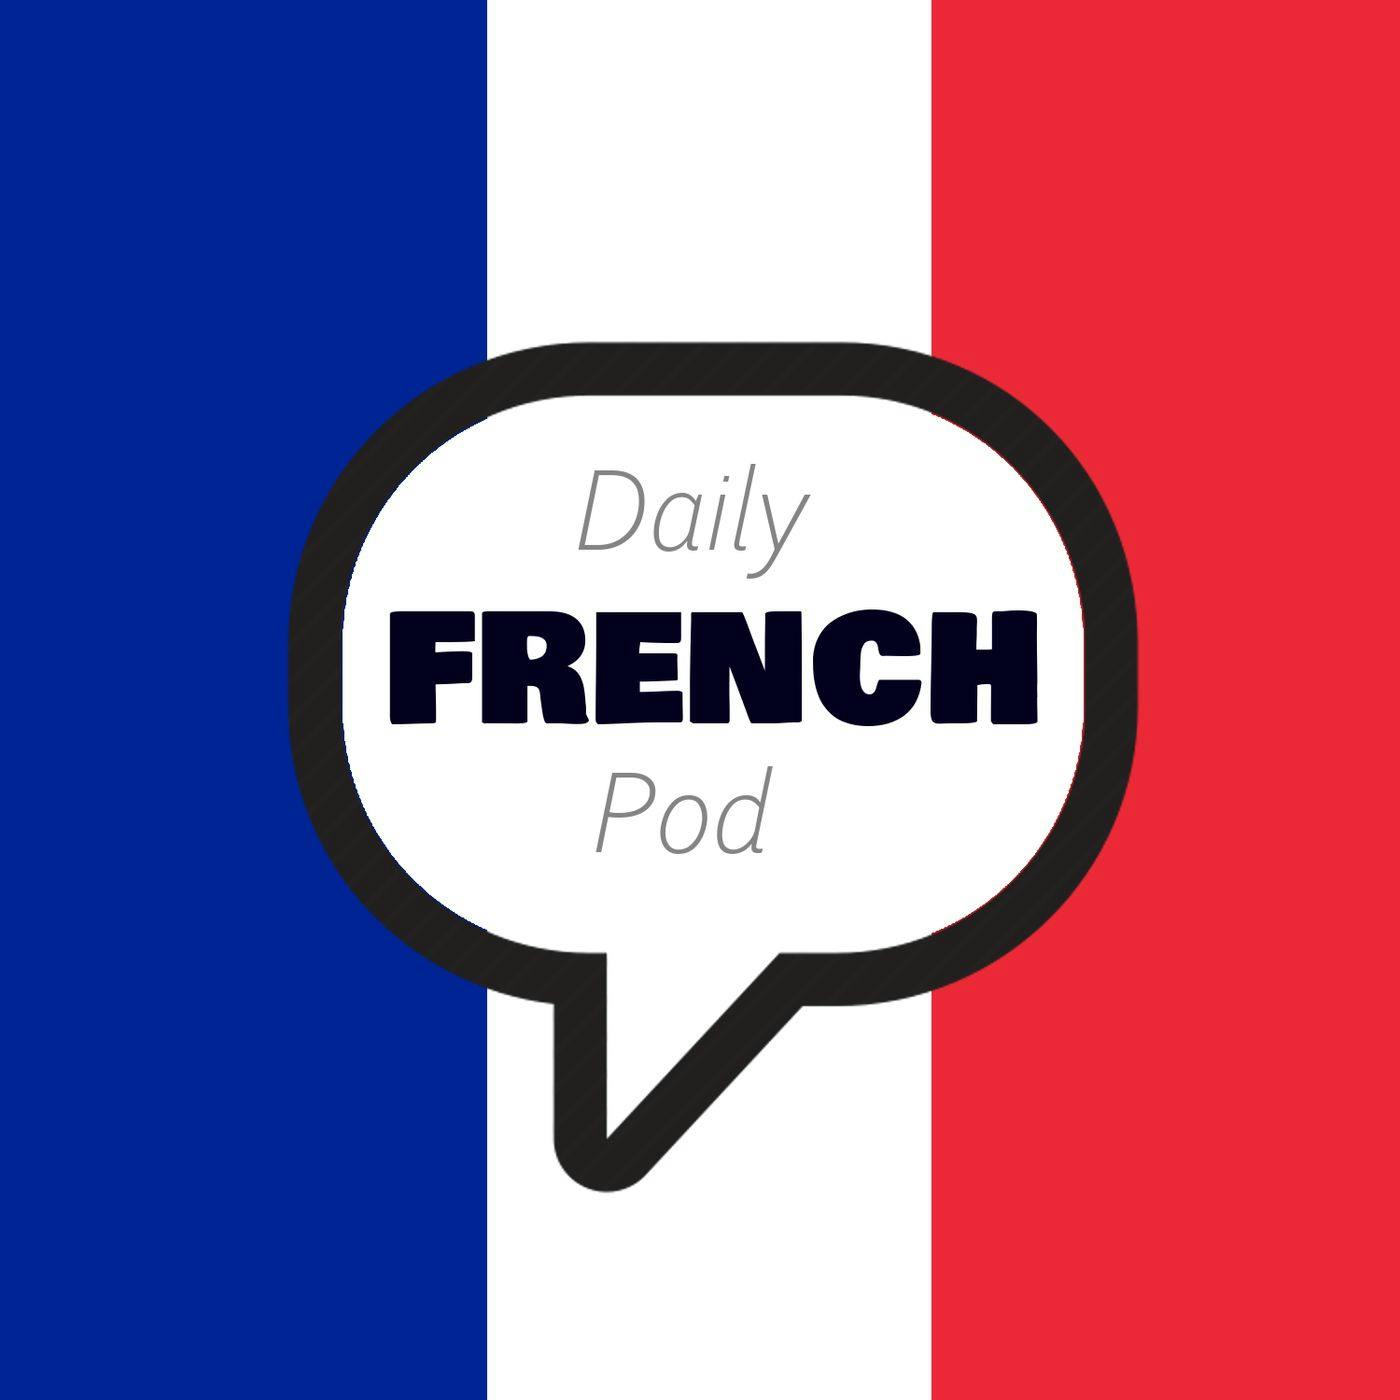 2916 – La France et la Chine (France and China)